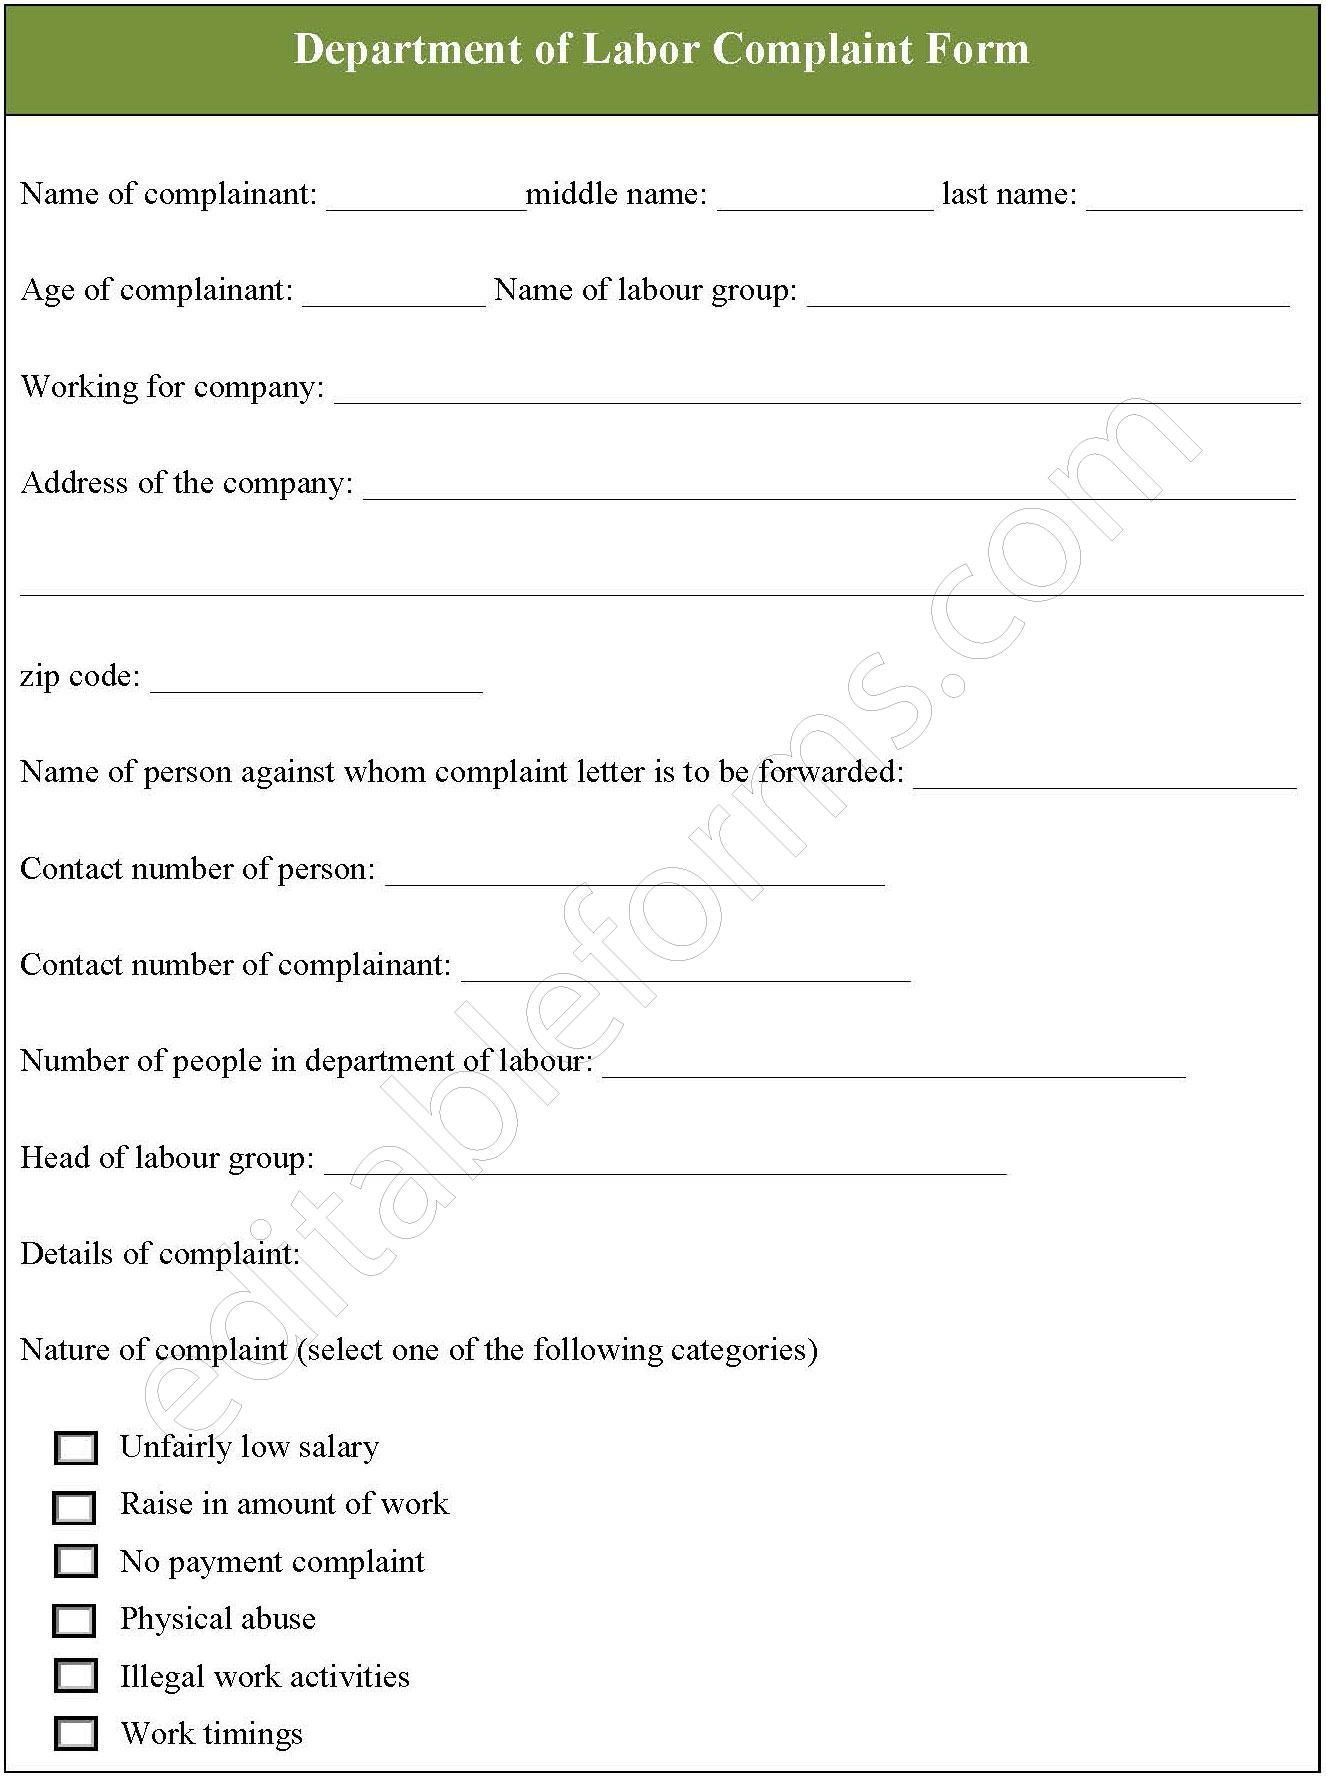 Department of Labor Complaint Form